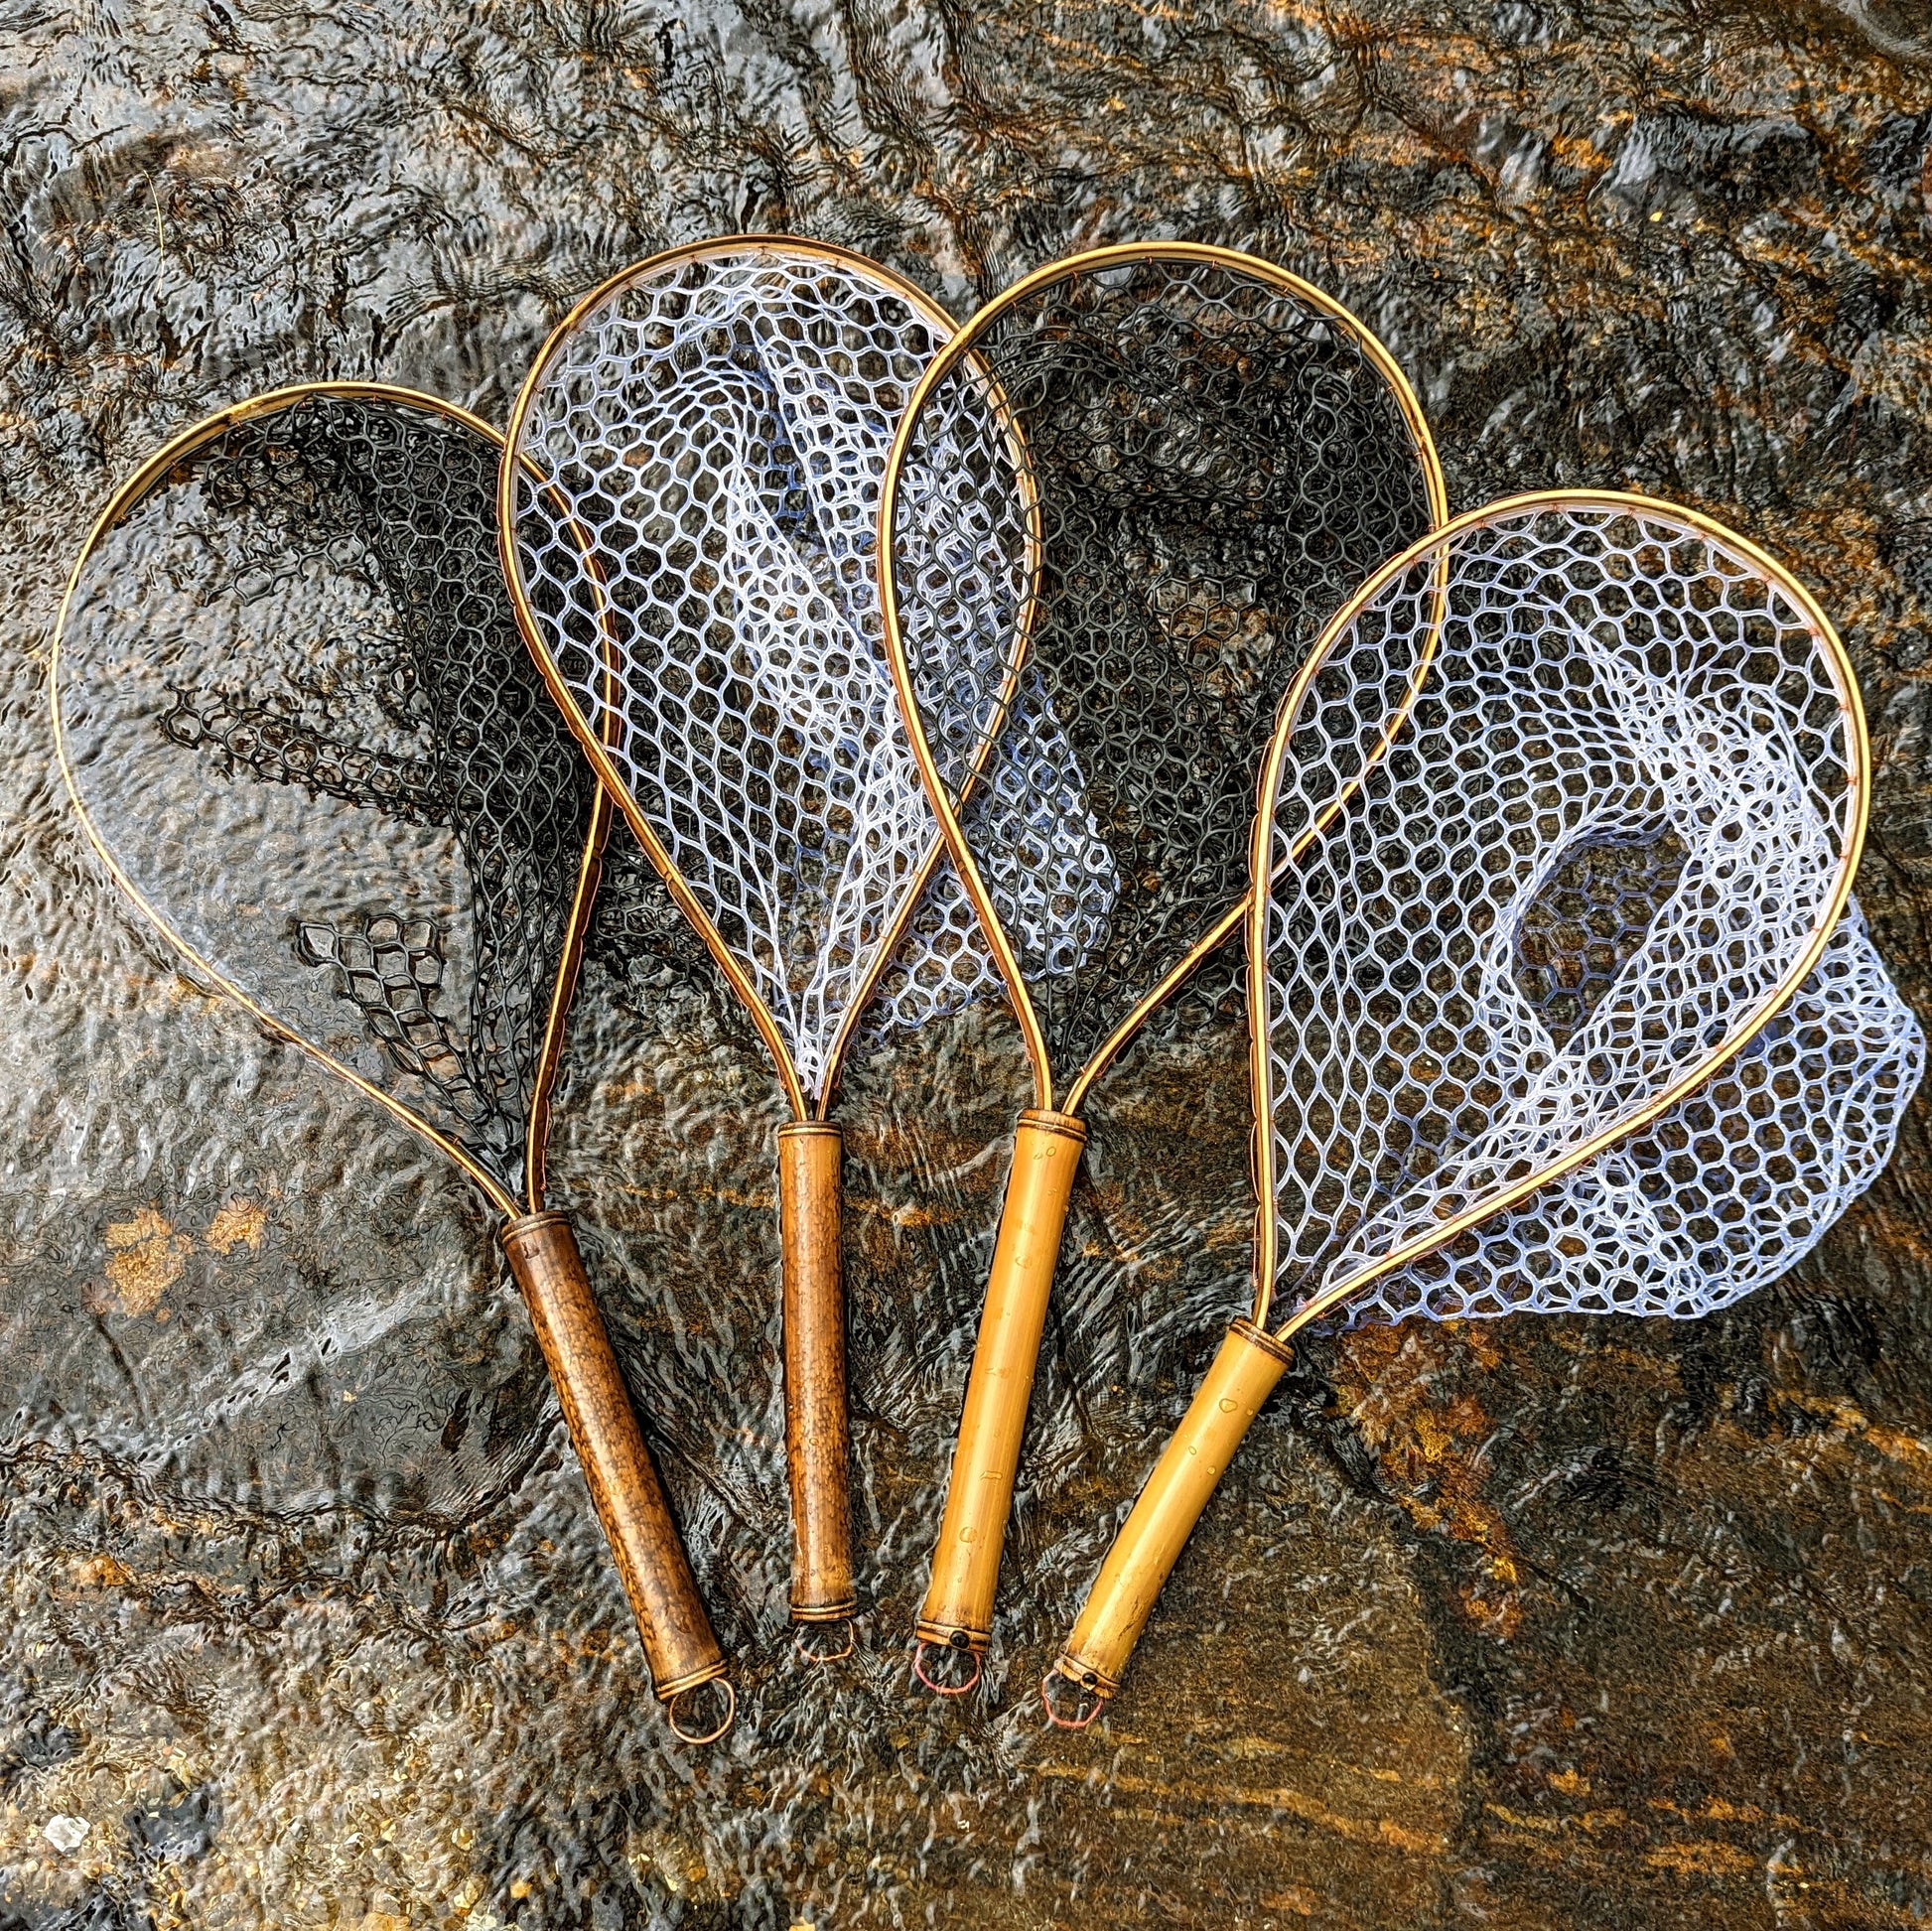 Upstream Bamboo & Copper Fly Fishing Net – Hellbender Nets